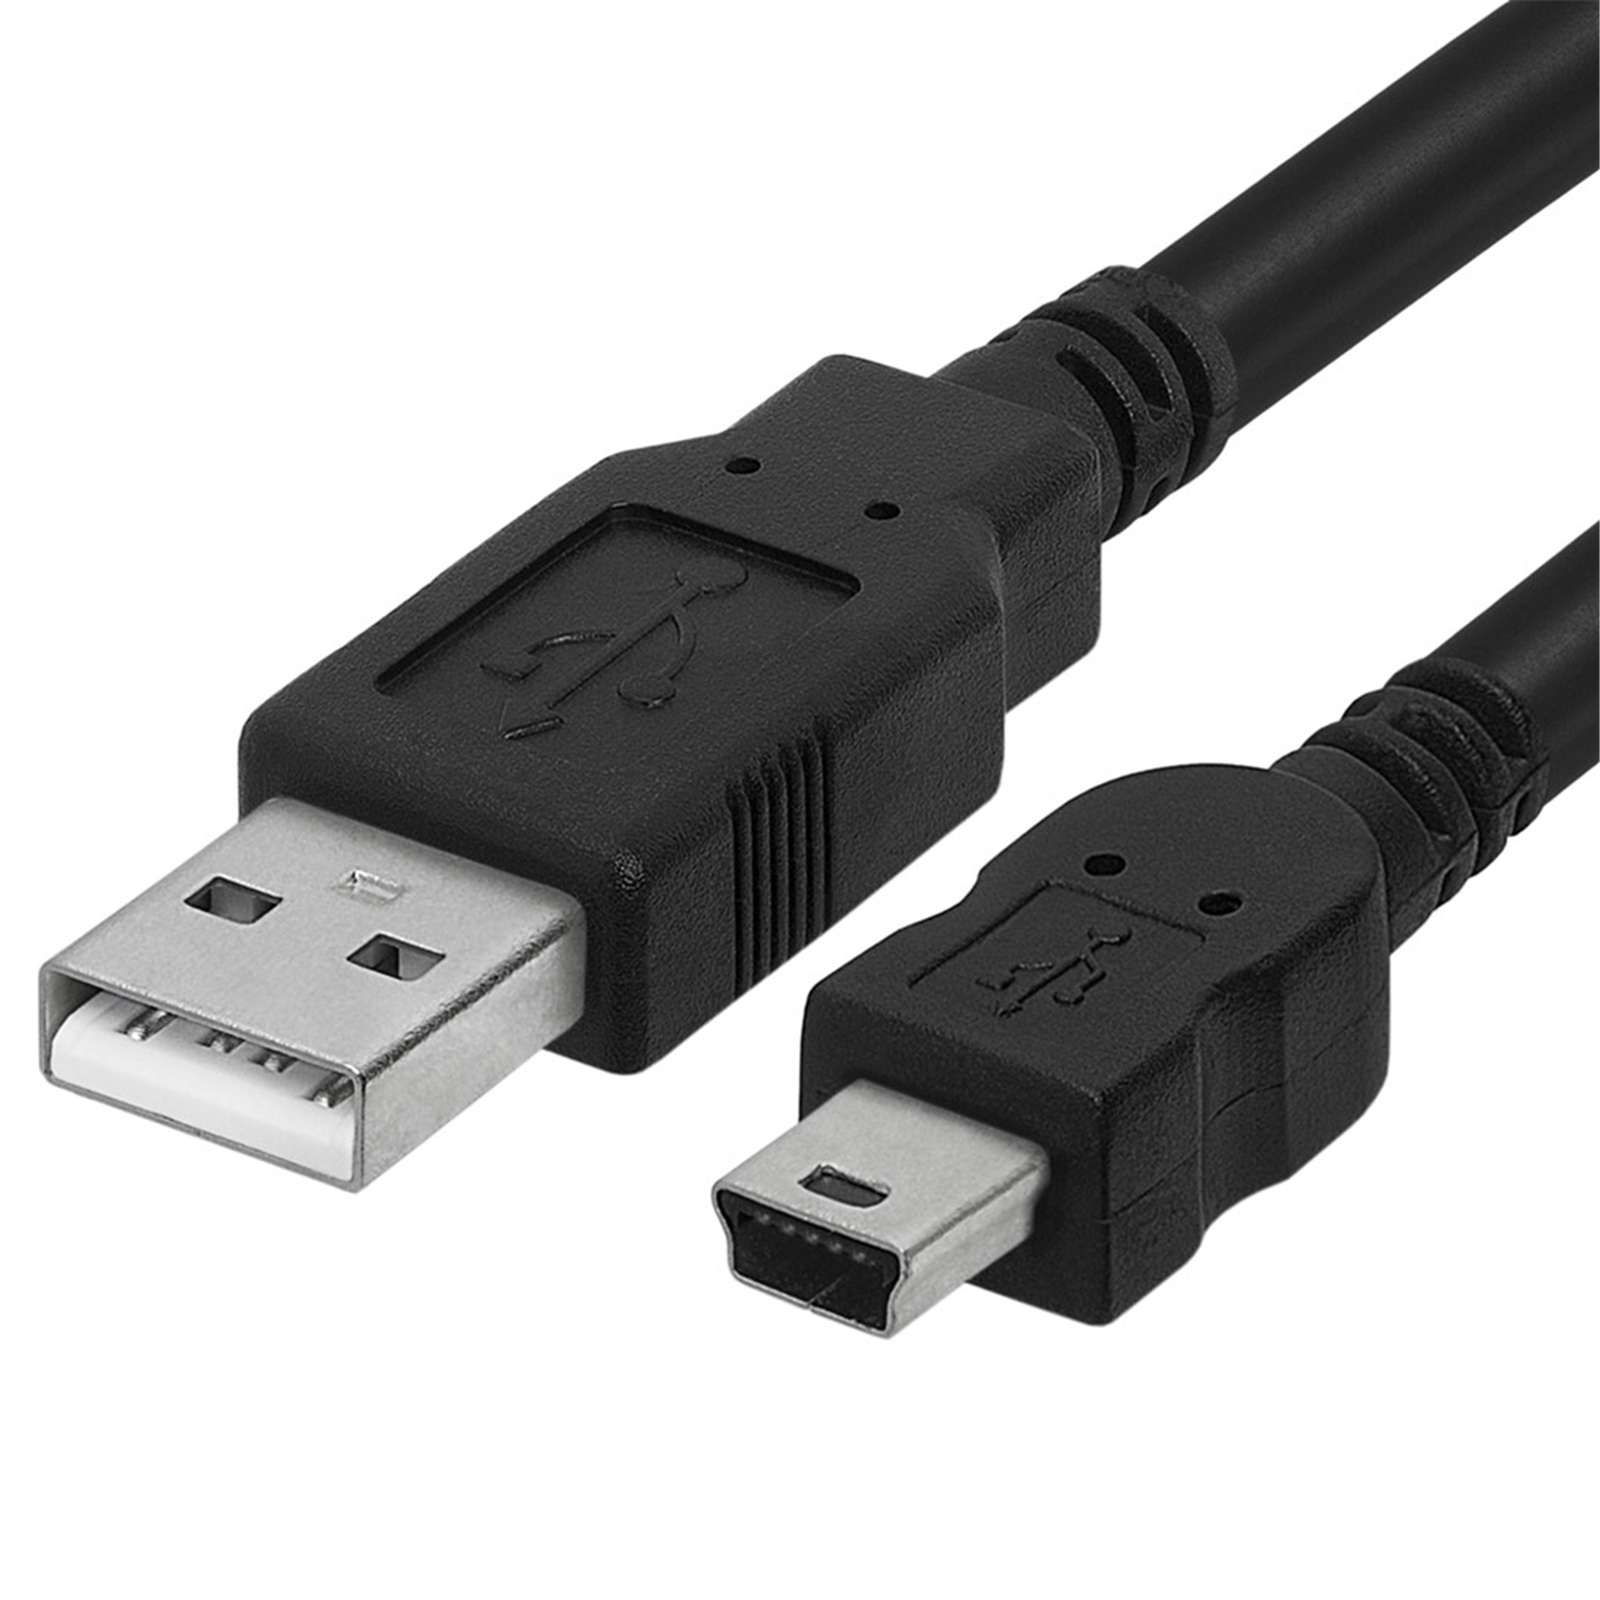 Cable USB A / USB Mini B 5-pin 1.8m AK-USB-03